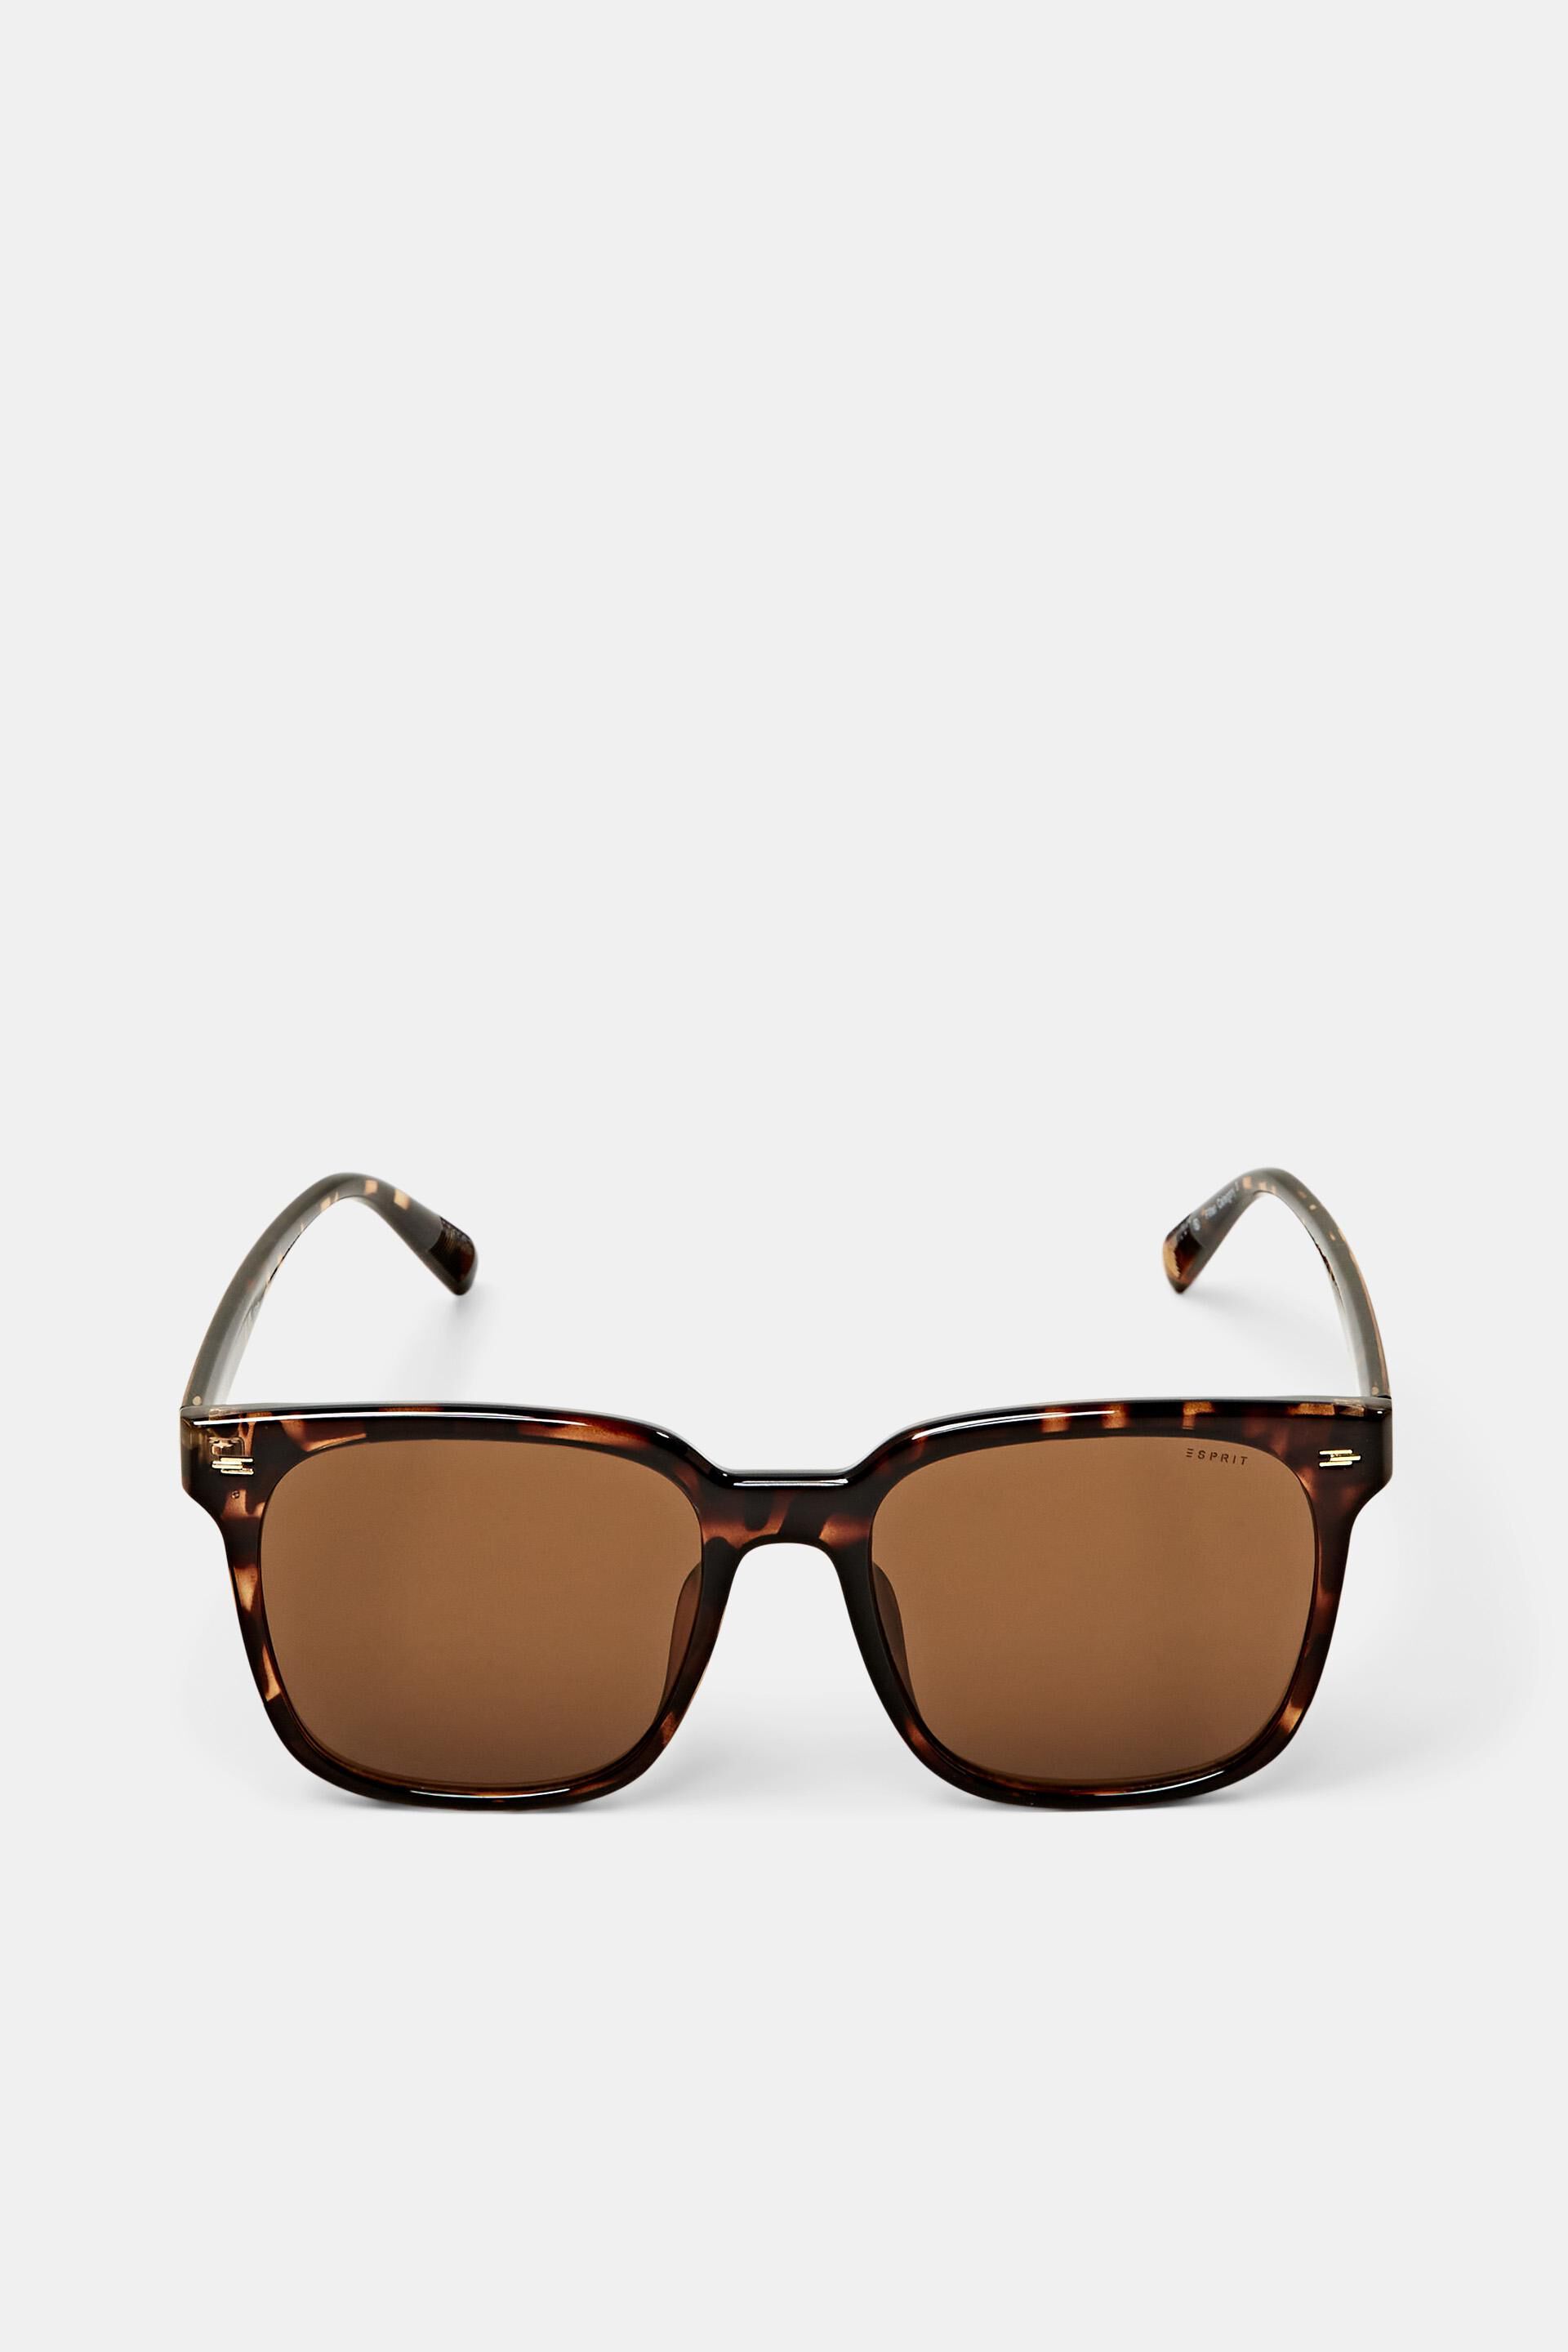 Esprit Lightweight sunglasses acetate